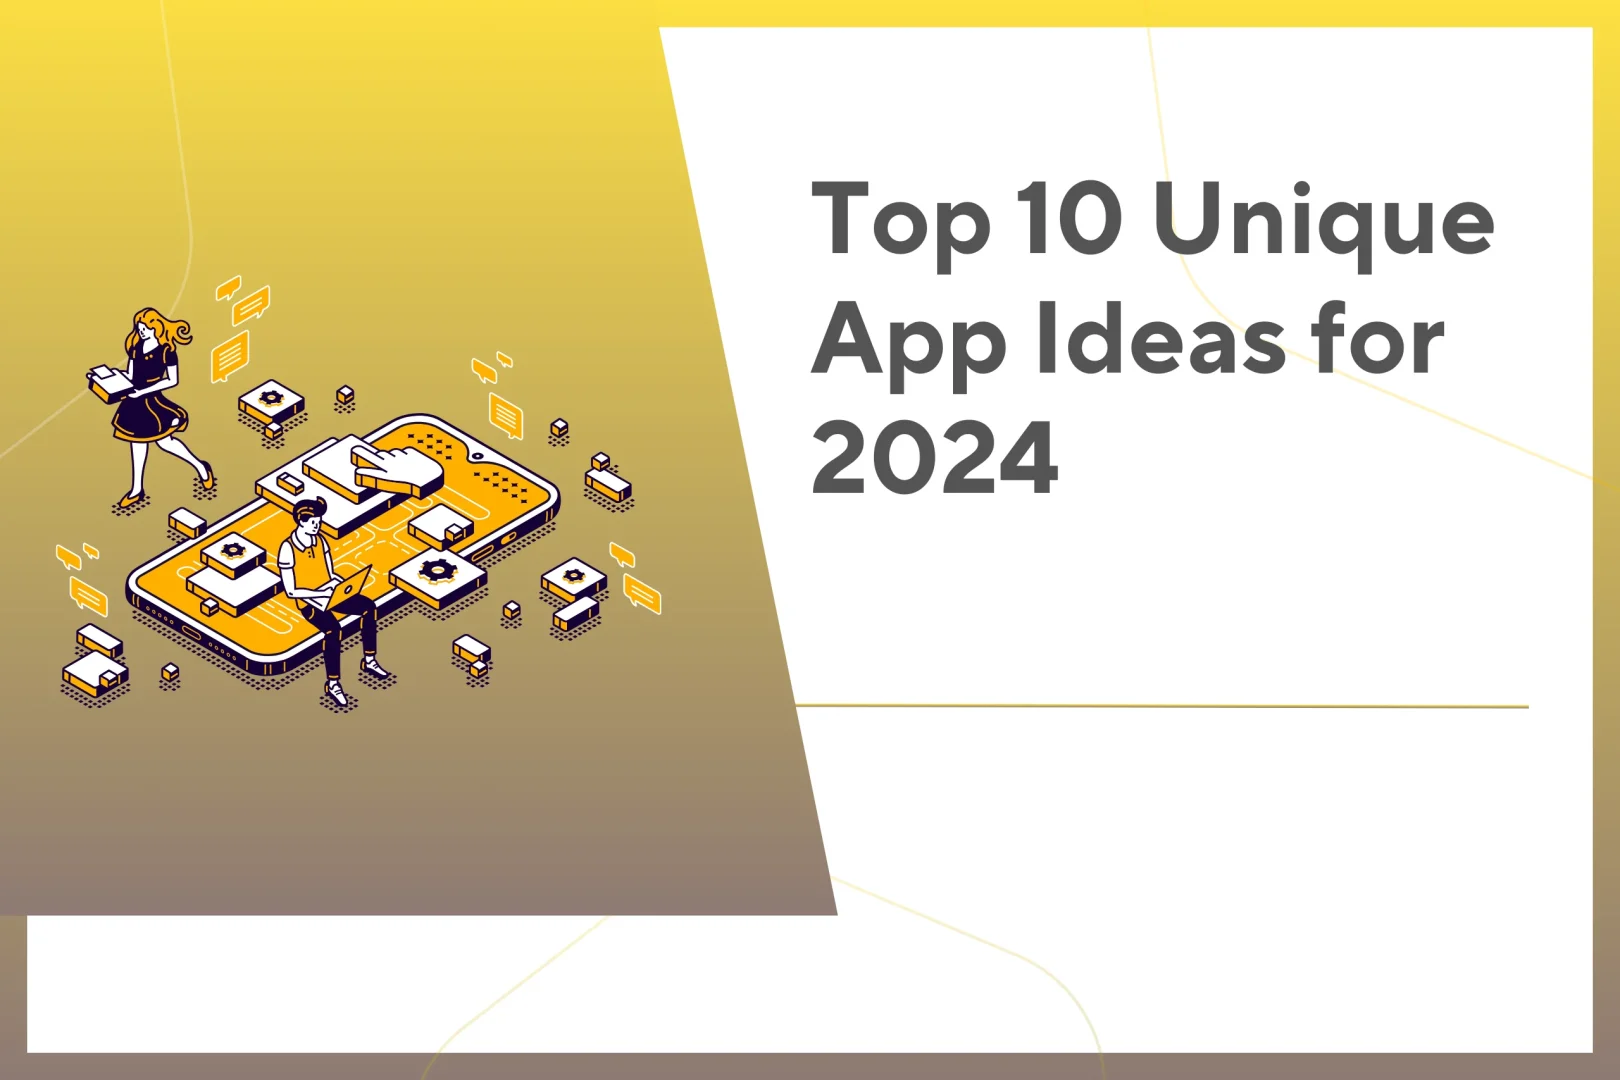 launch unique apps with top mobile app development companies in Dubai